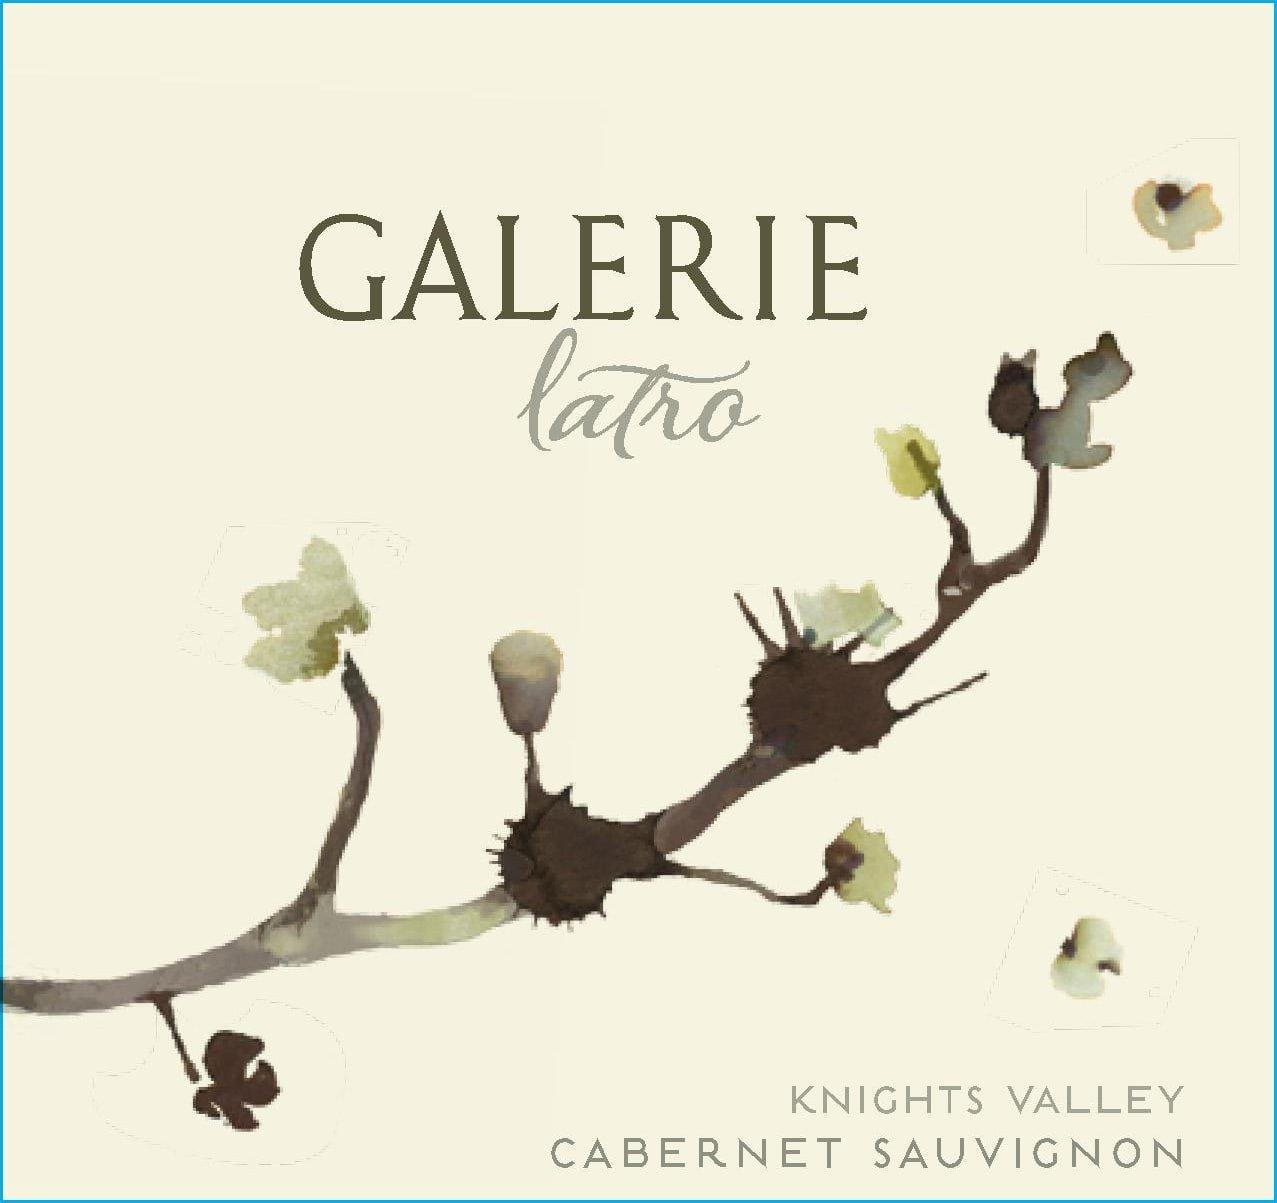 Galerie 2017 Cabernet Sauvignon, Latro, Knights Valley